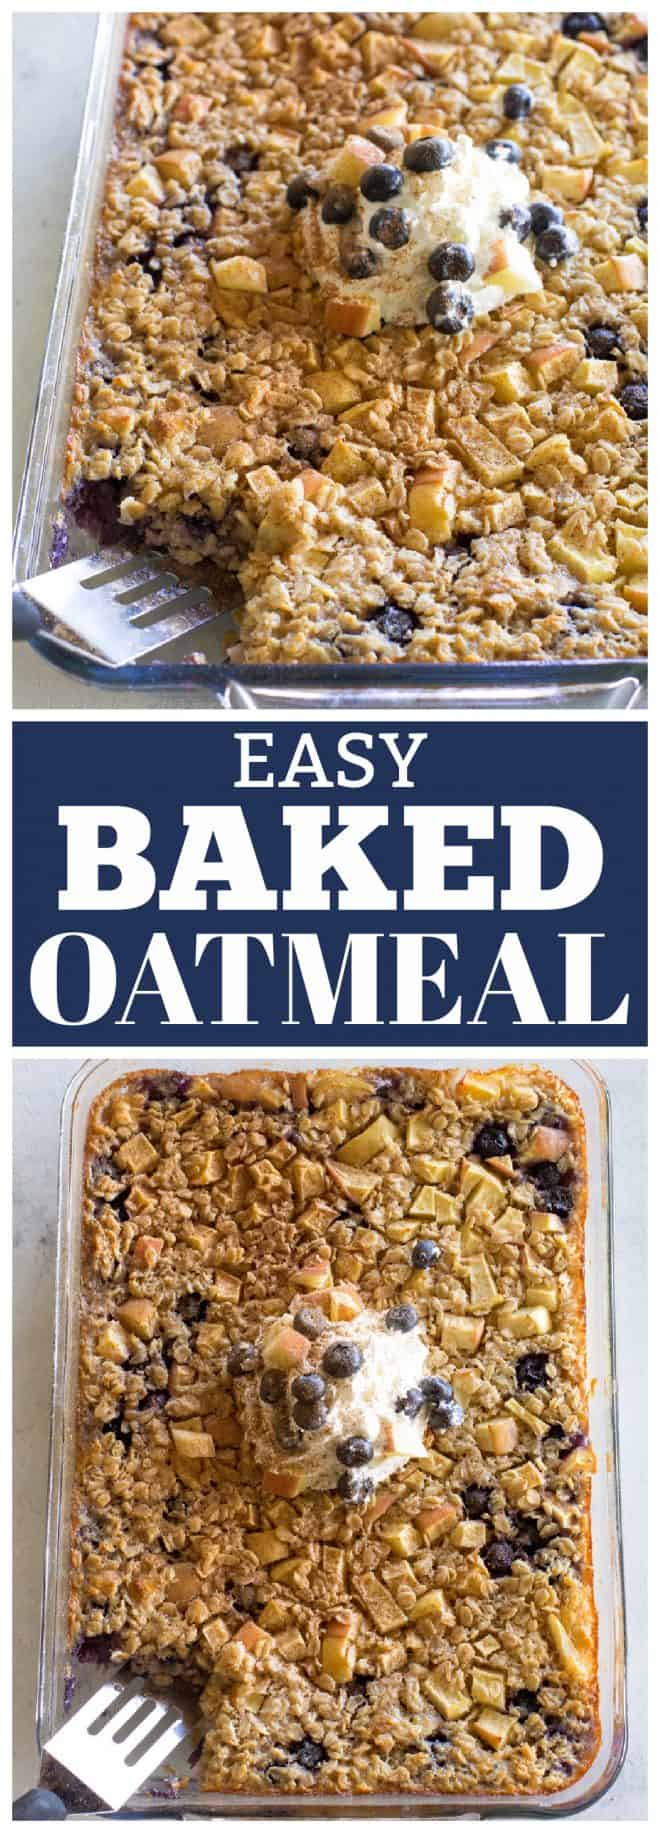 fb image - Baked Oatmeal